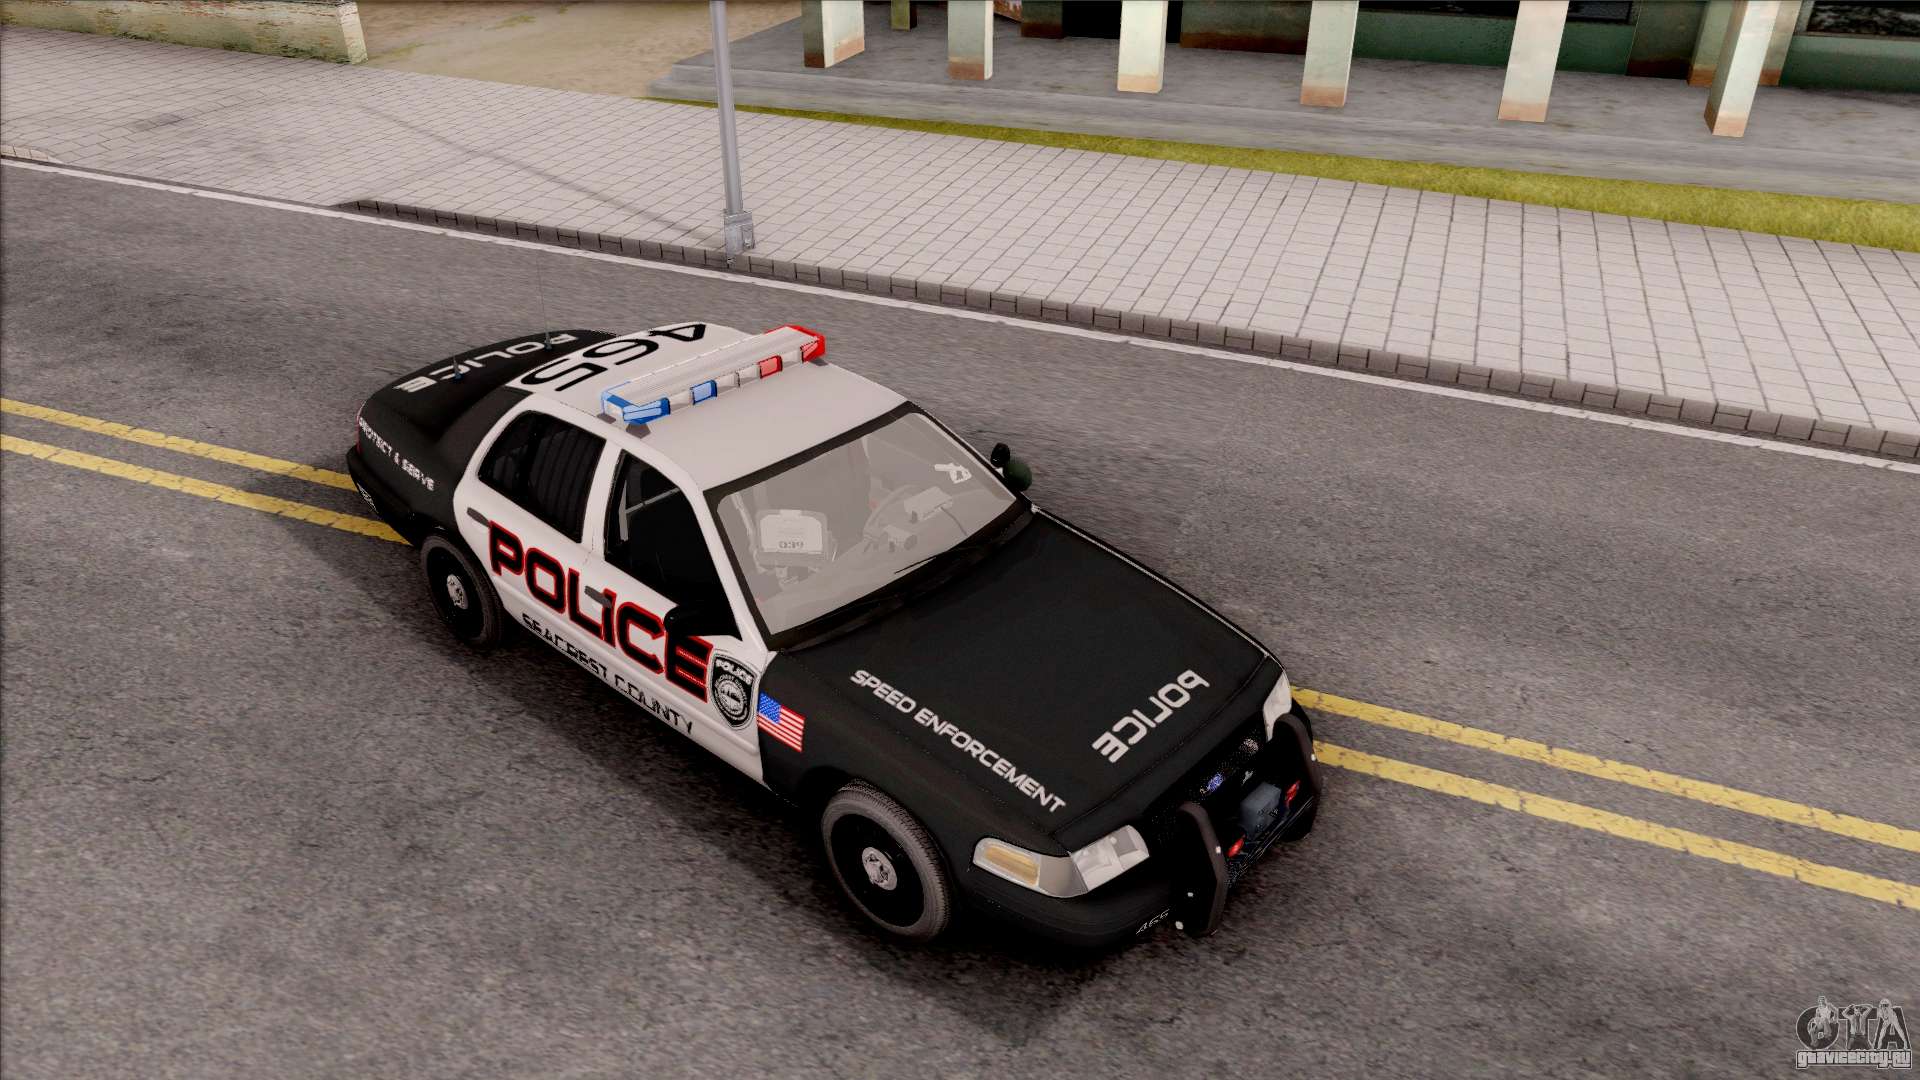 Policeman speed